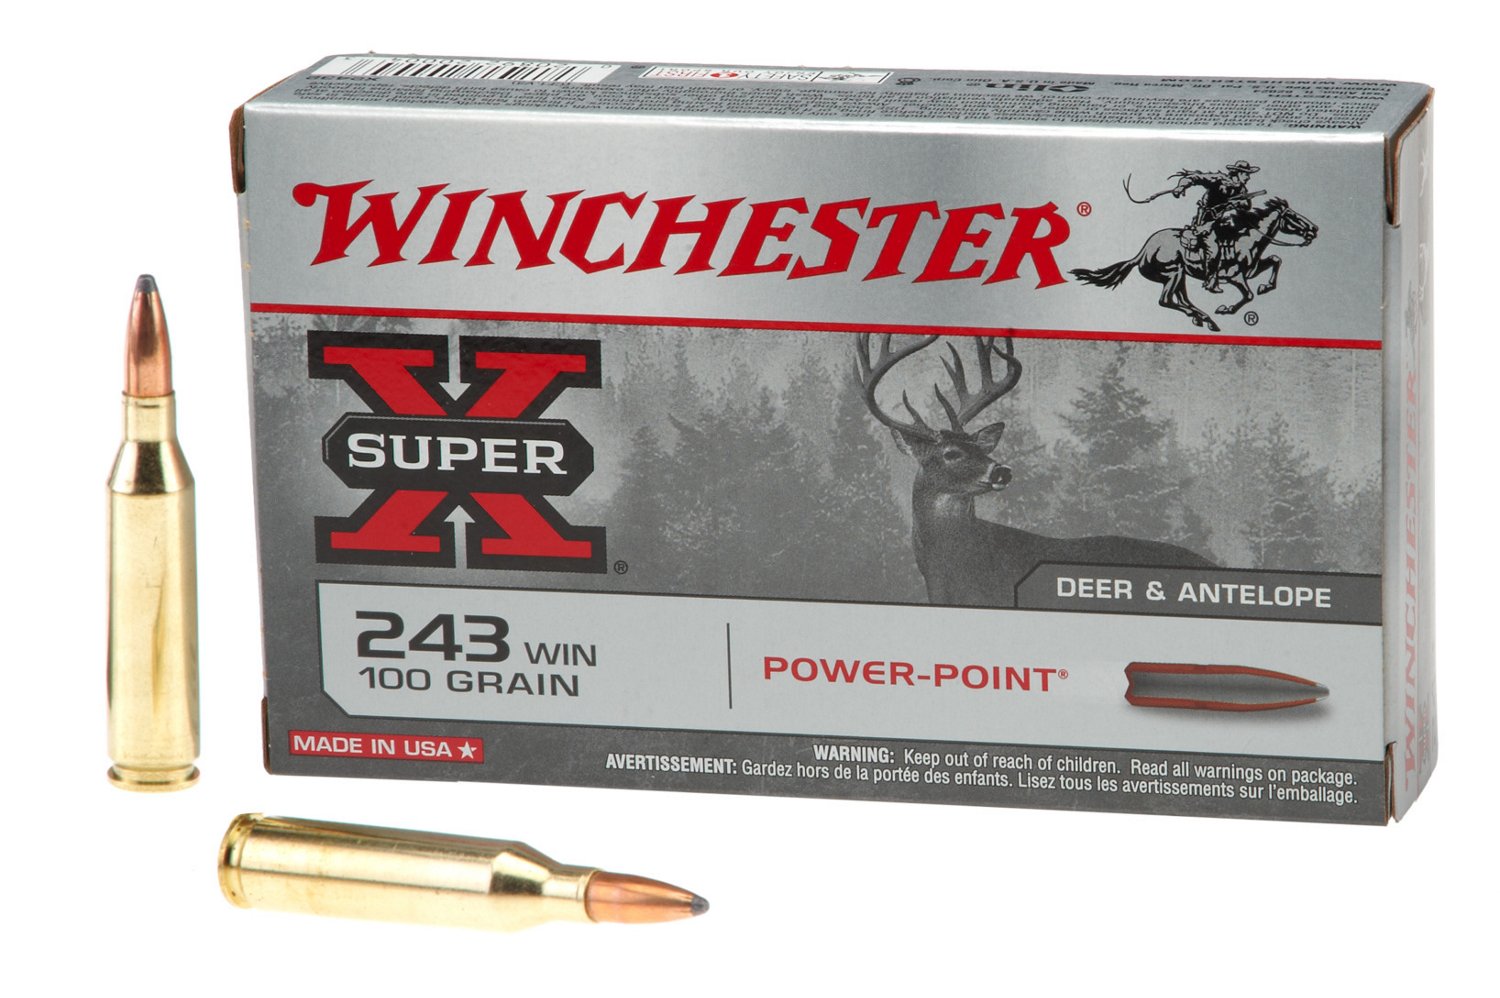 Sig Sauer Venari .243 Winchester Ammo 100gr Soft Point 20 Rounds